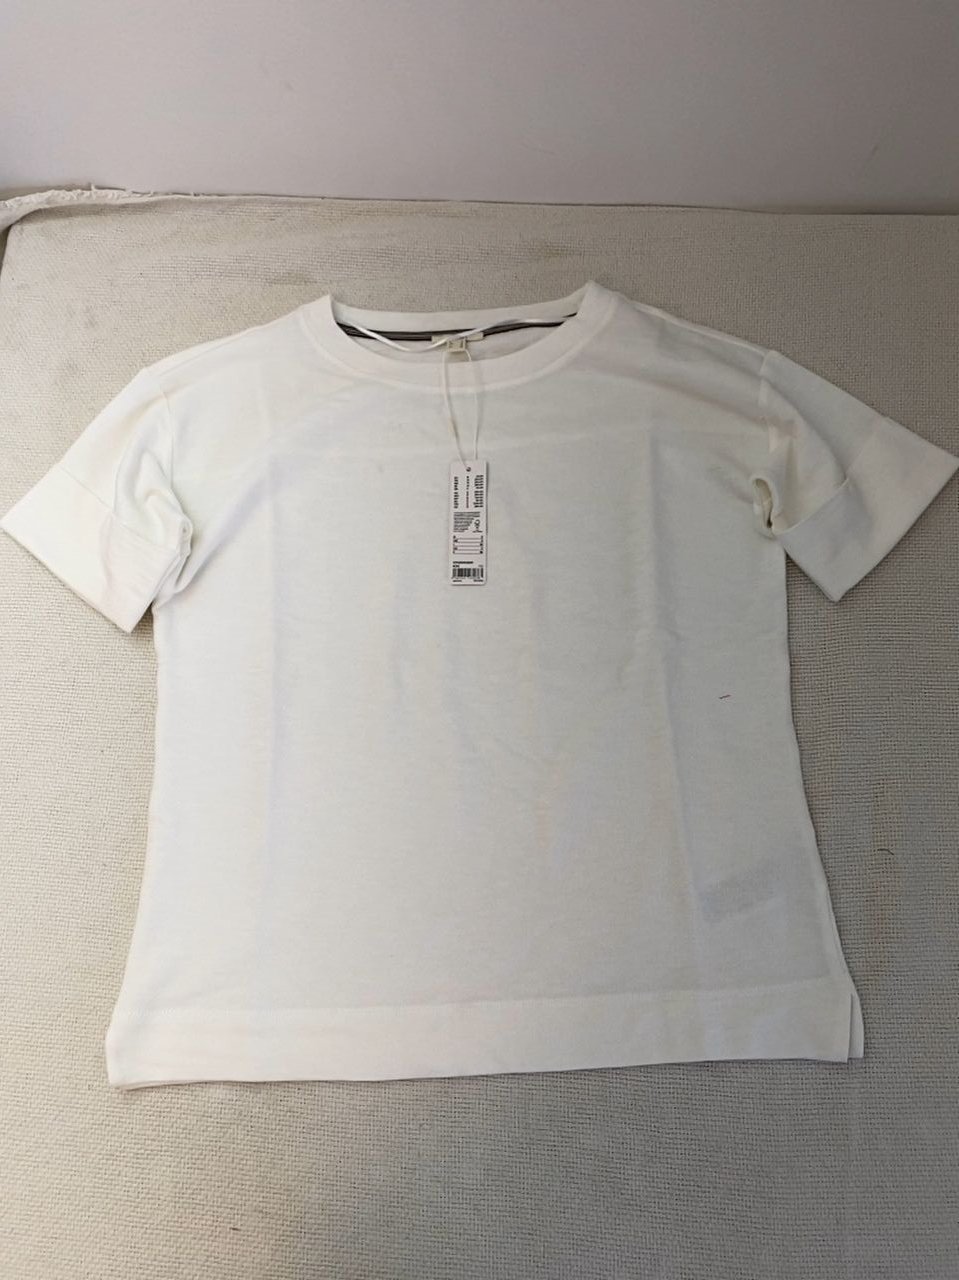 dámské tričko Esprit velikost M